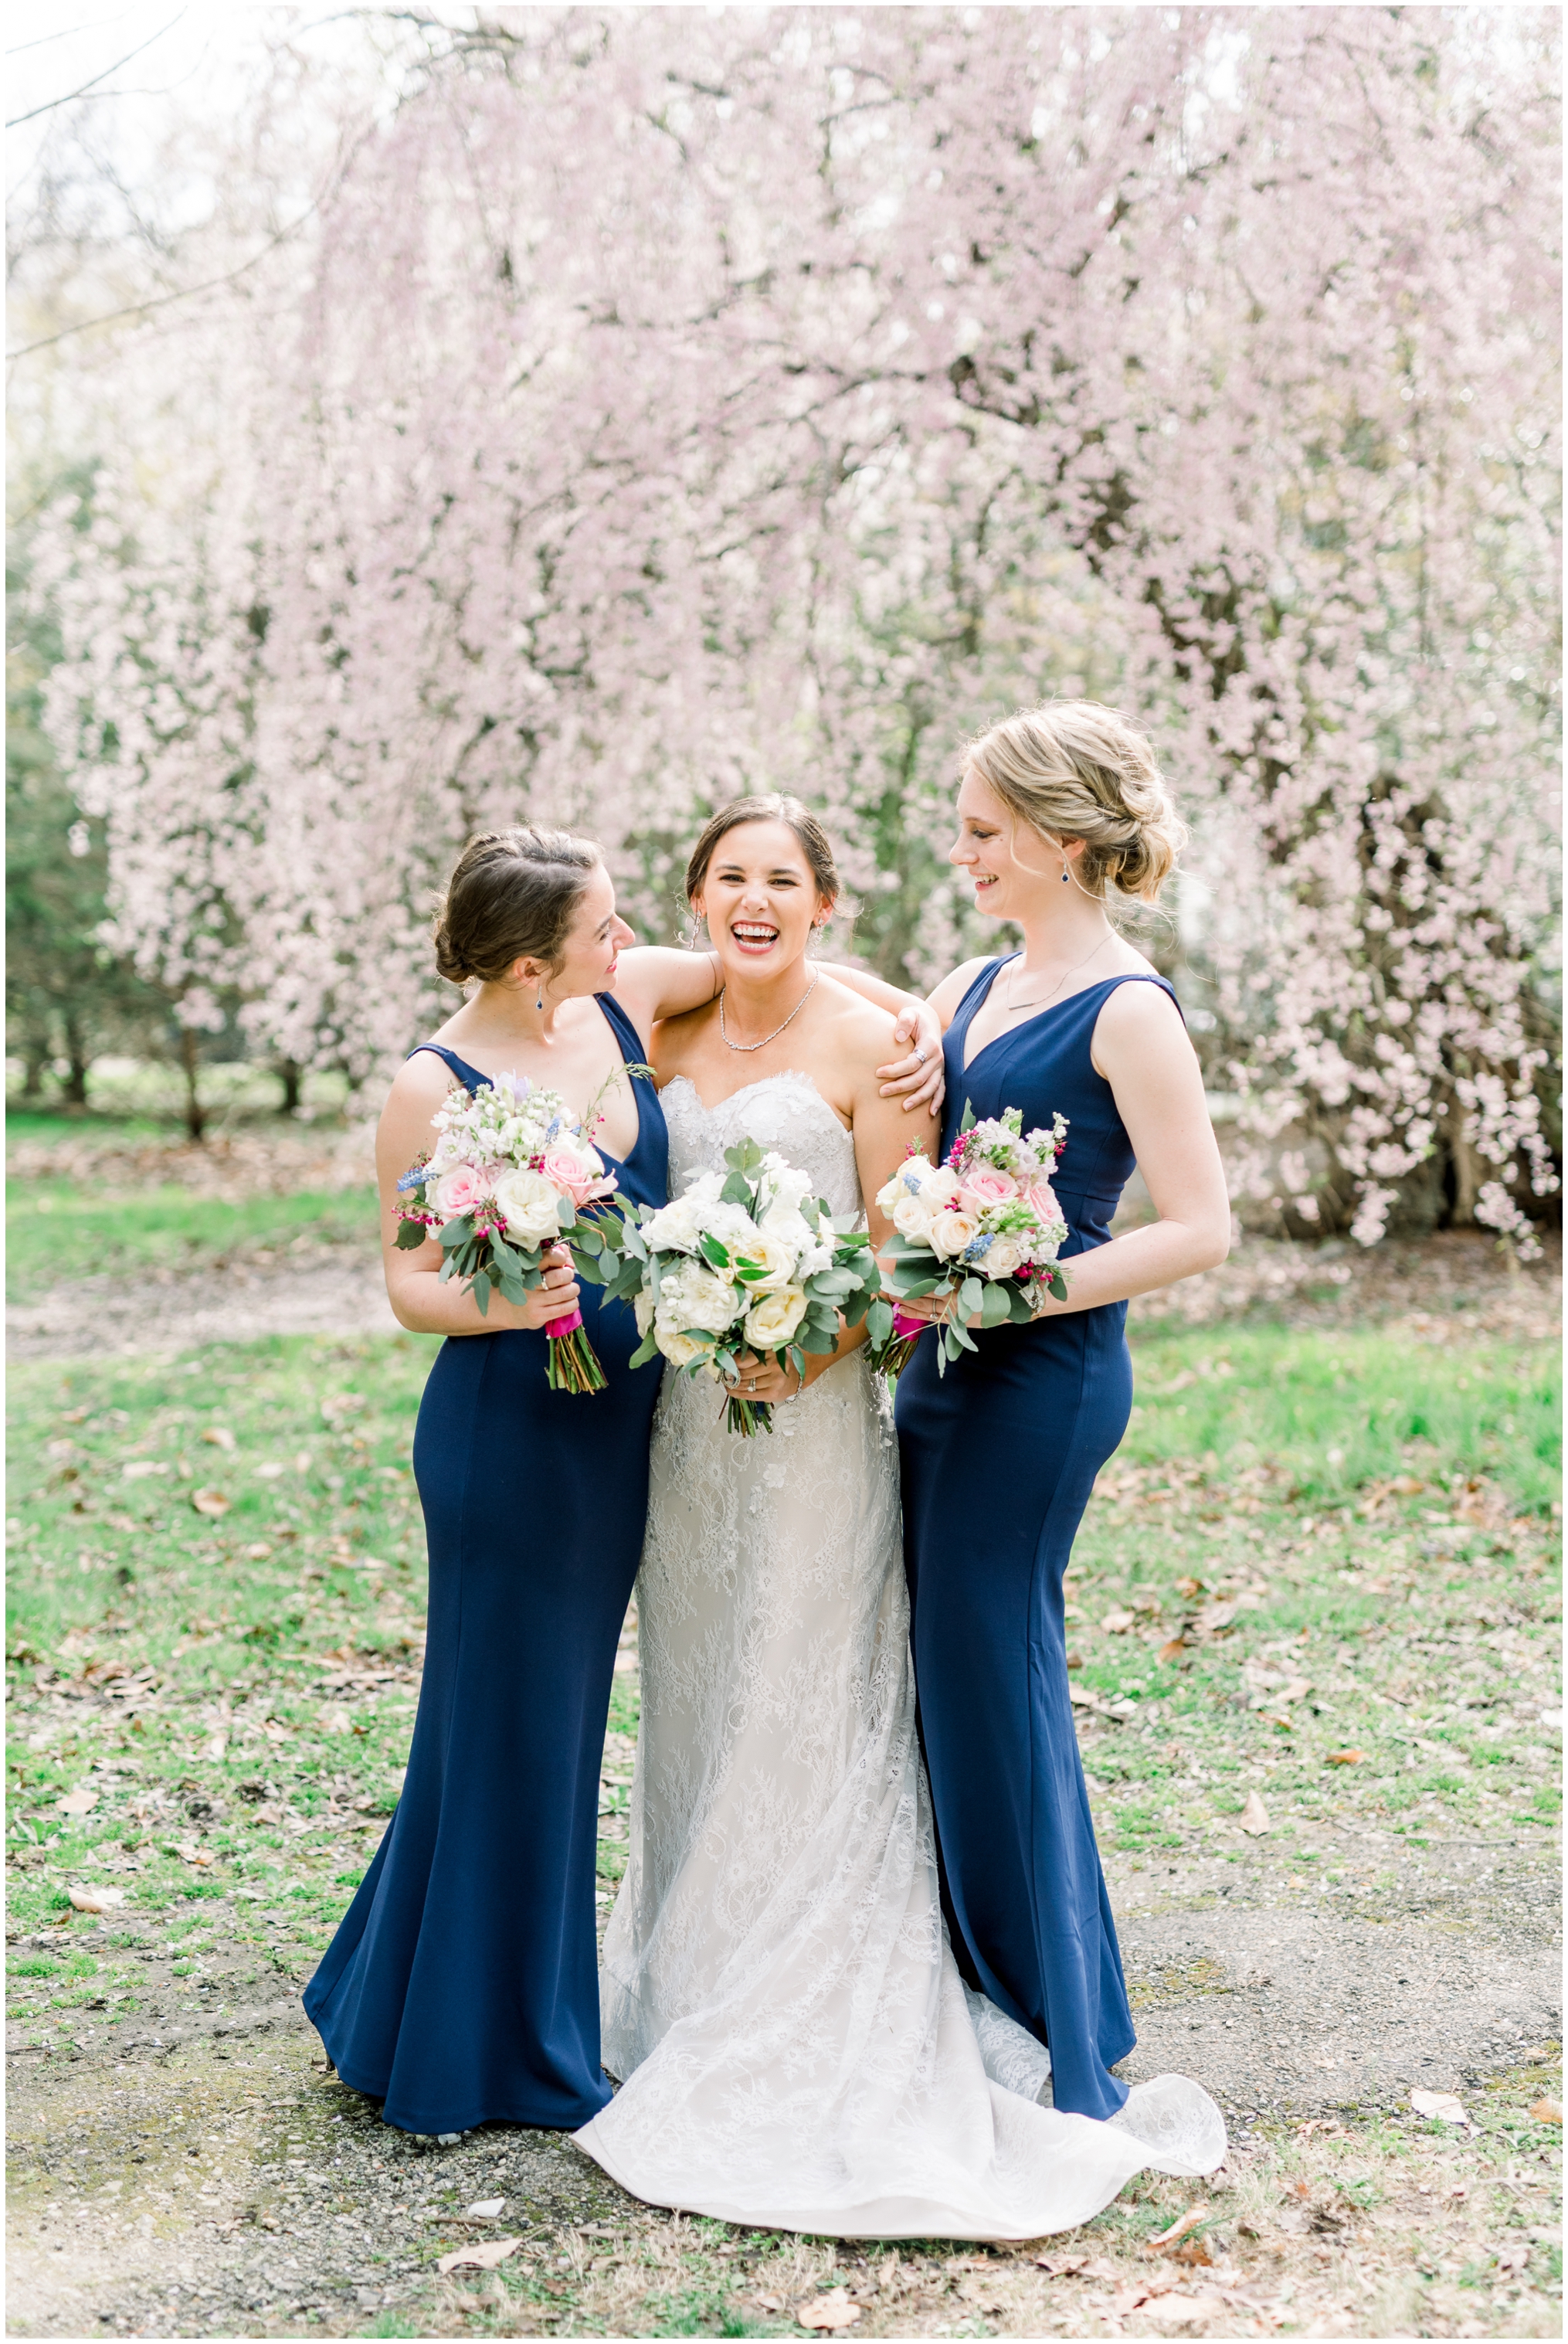 Krista Brackin Photography | April Wedding at The Carriage House at Rockwood Park_0058.jpg